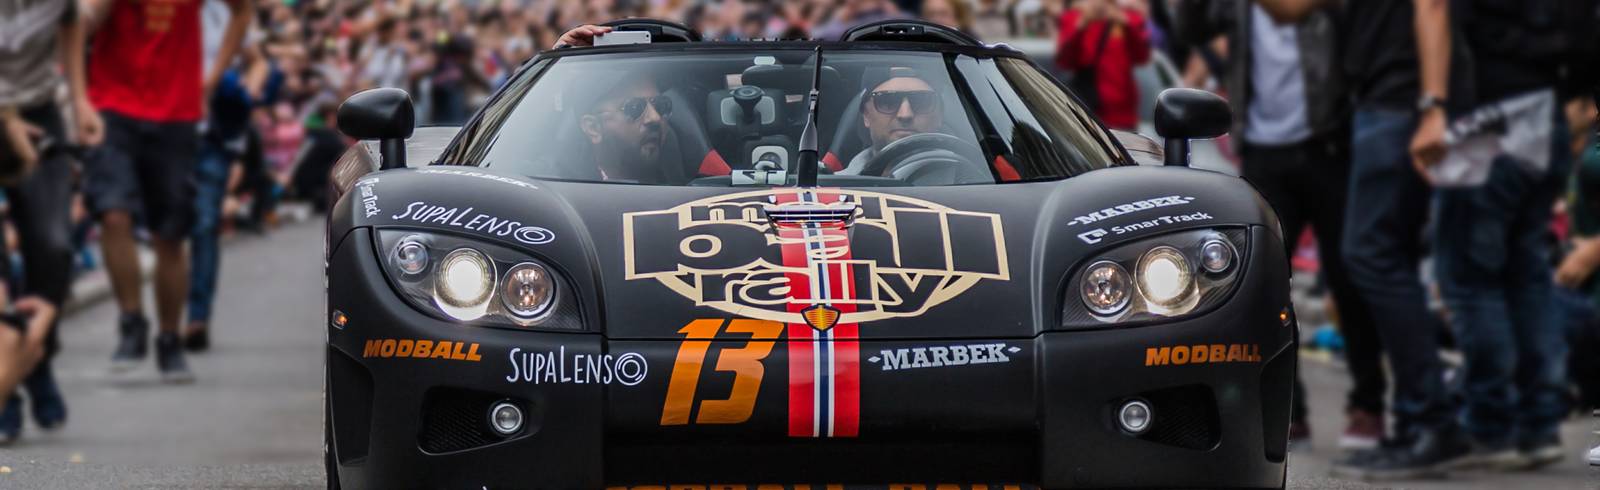 Luxusauto-Rallye "Modball" steuert auf Wien zu